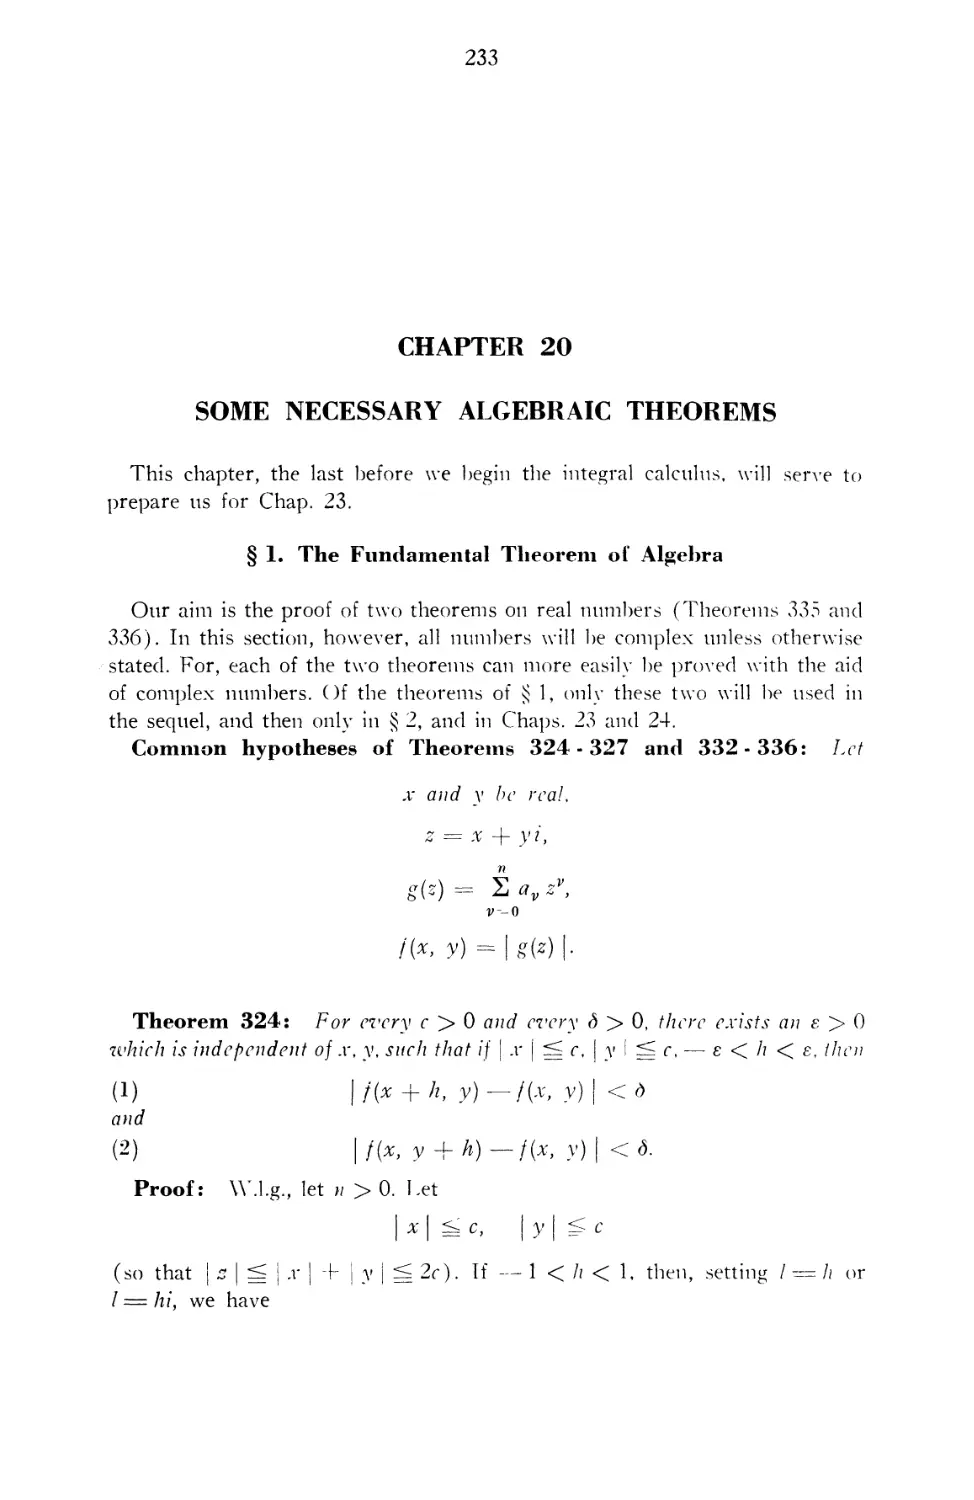 Chapter 20 Some Necessary Algebraic Theorems